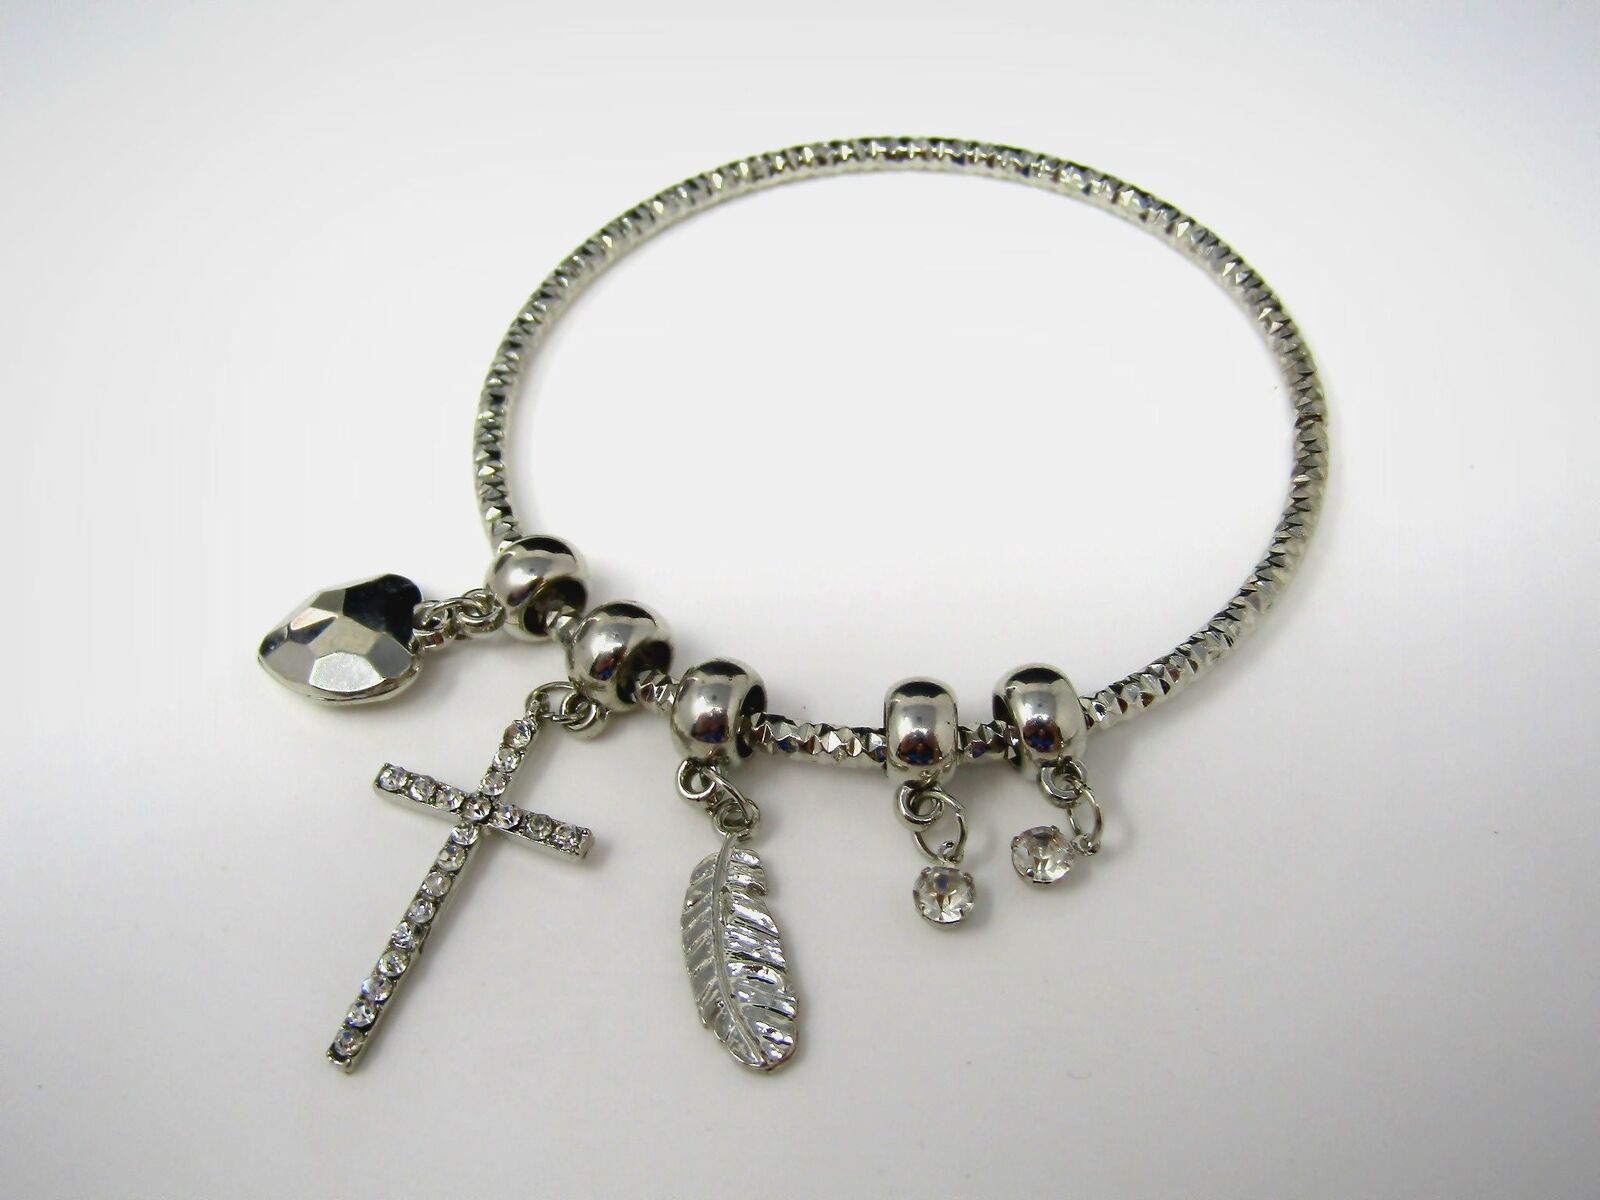 Vintage Christian Bracelet: Cross Heart Silver Tone Bangle Design